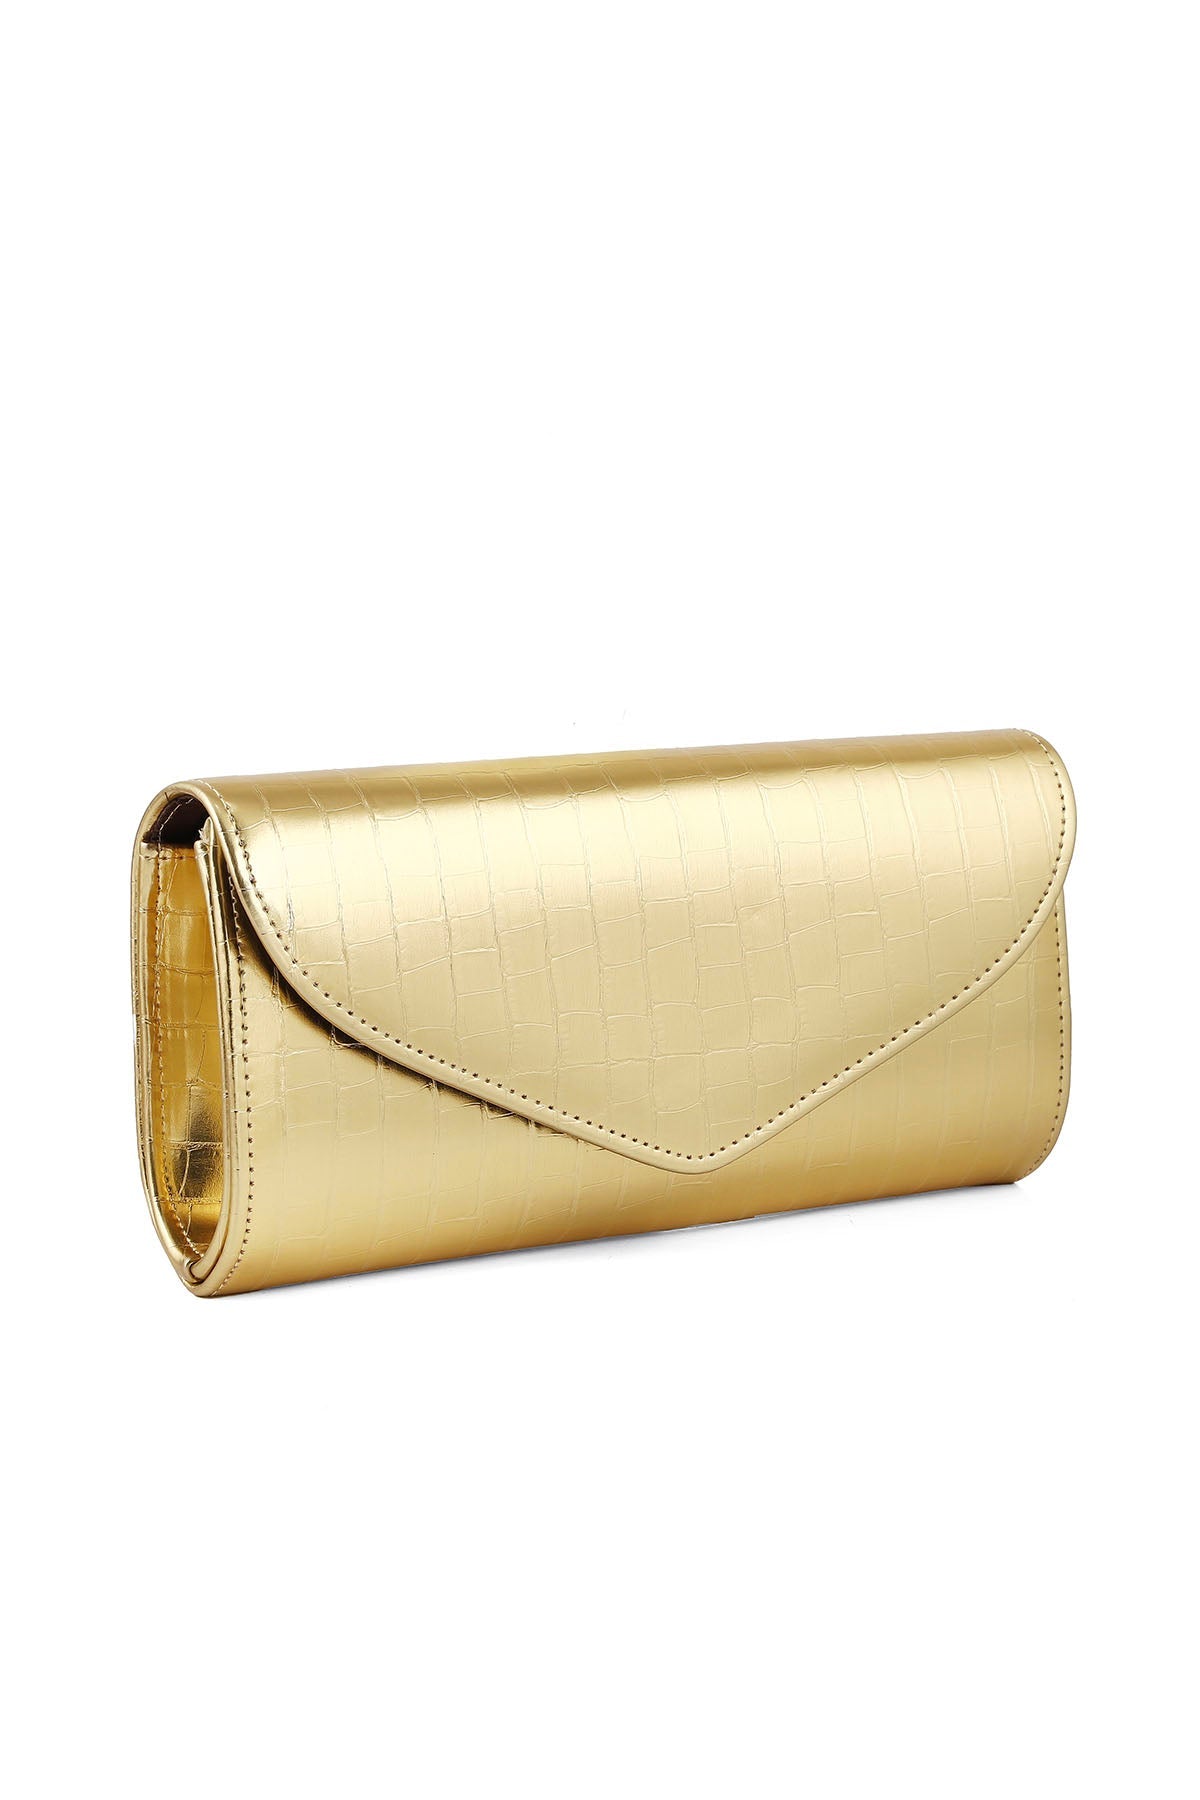 Flap Shoulder Bags B21581-Golden